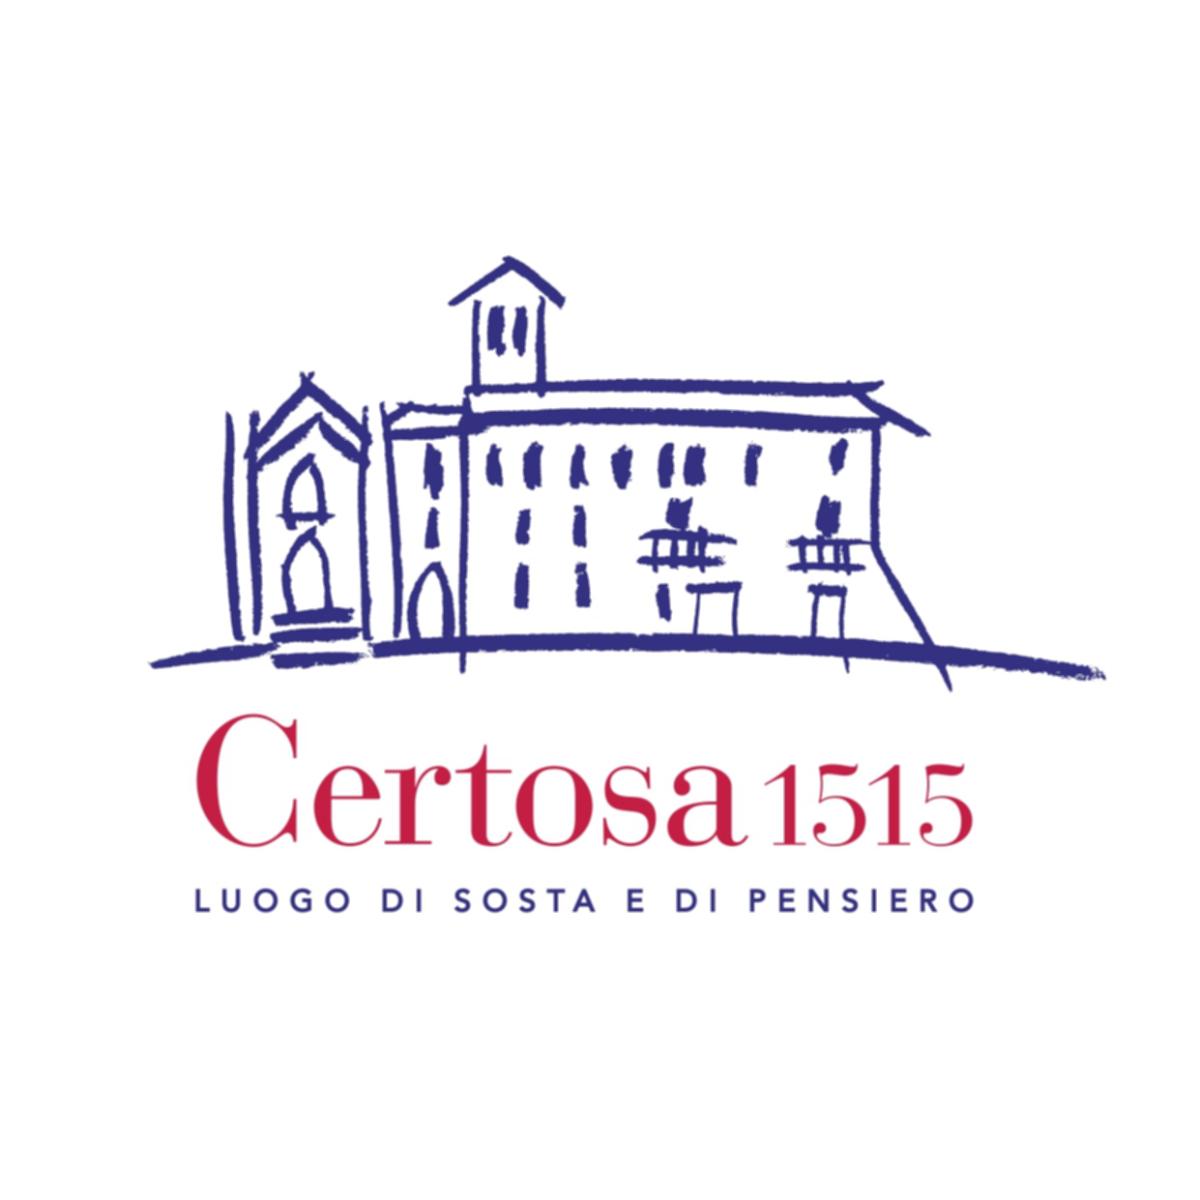 CERTOSA 1515